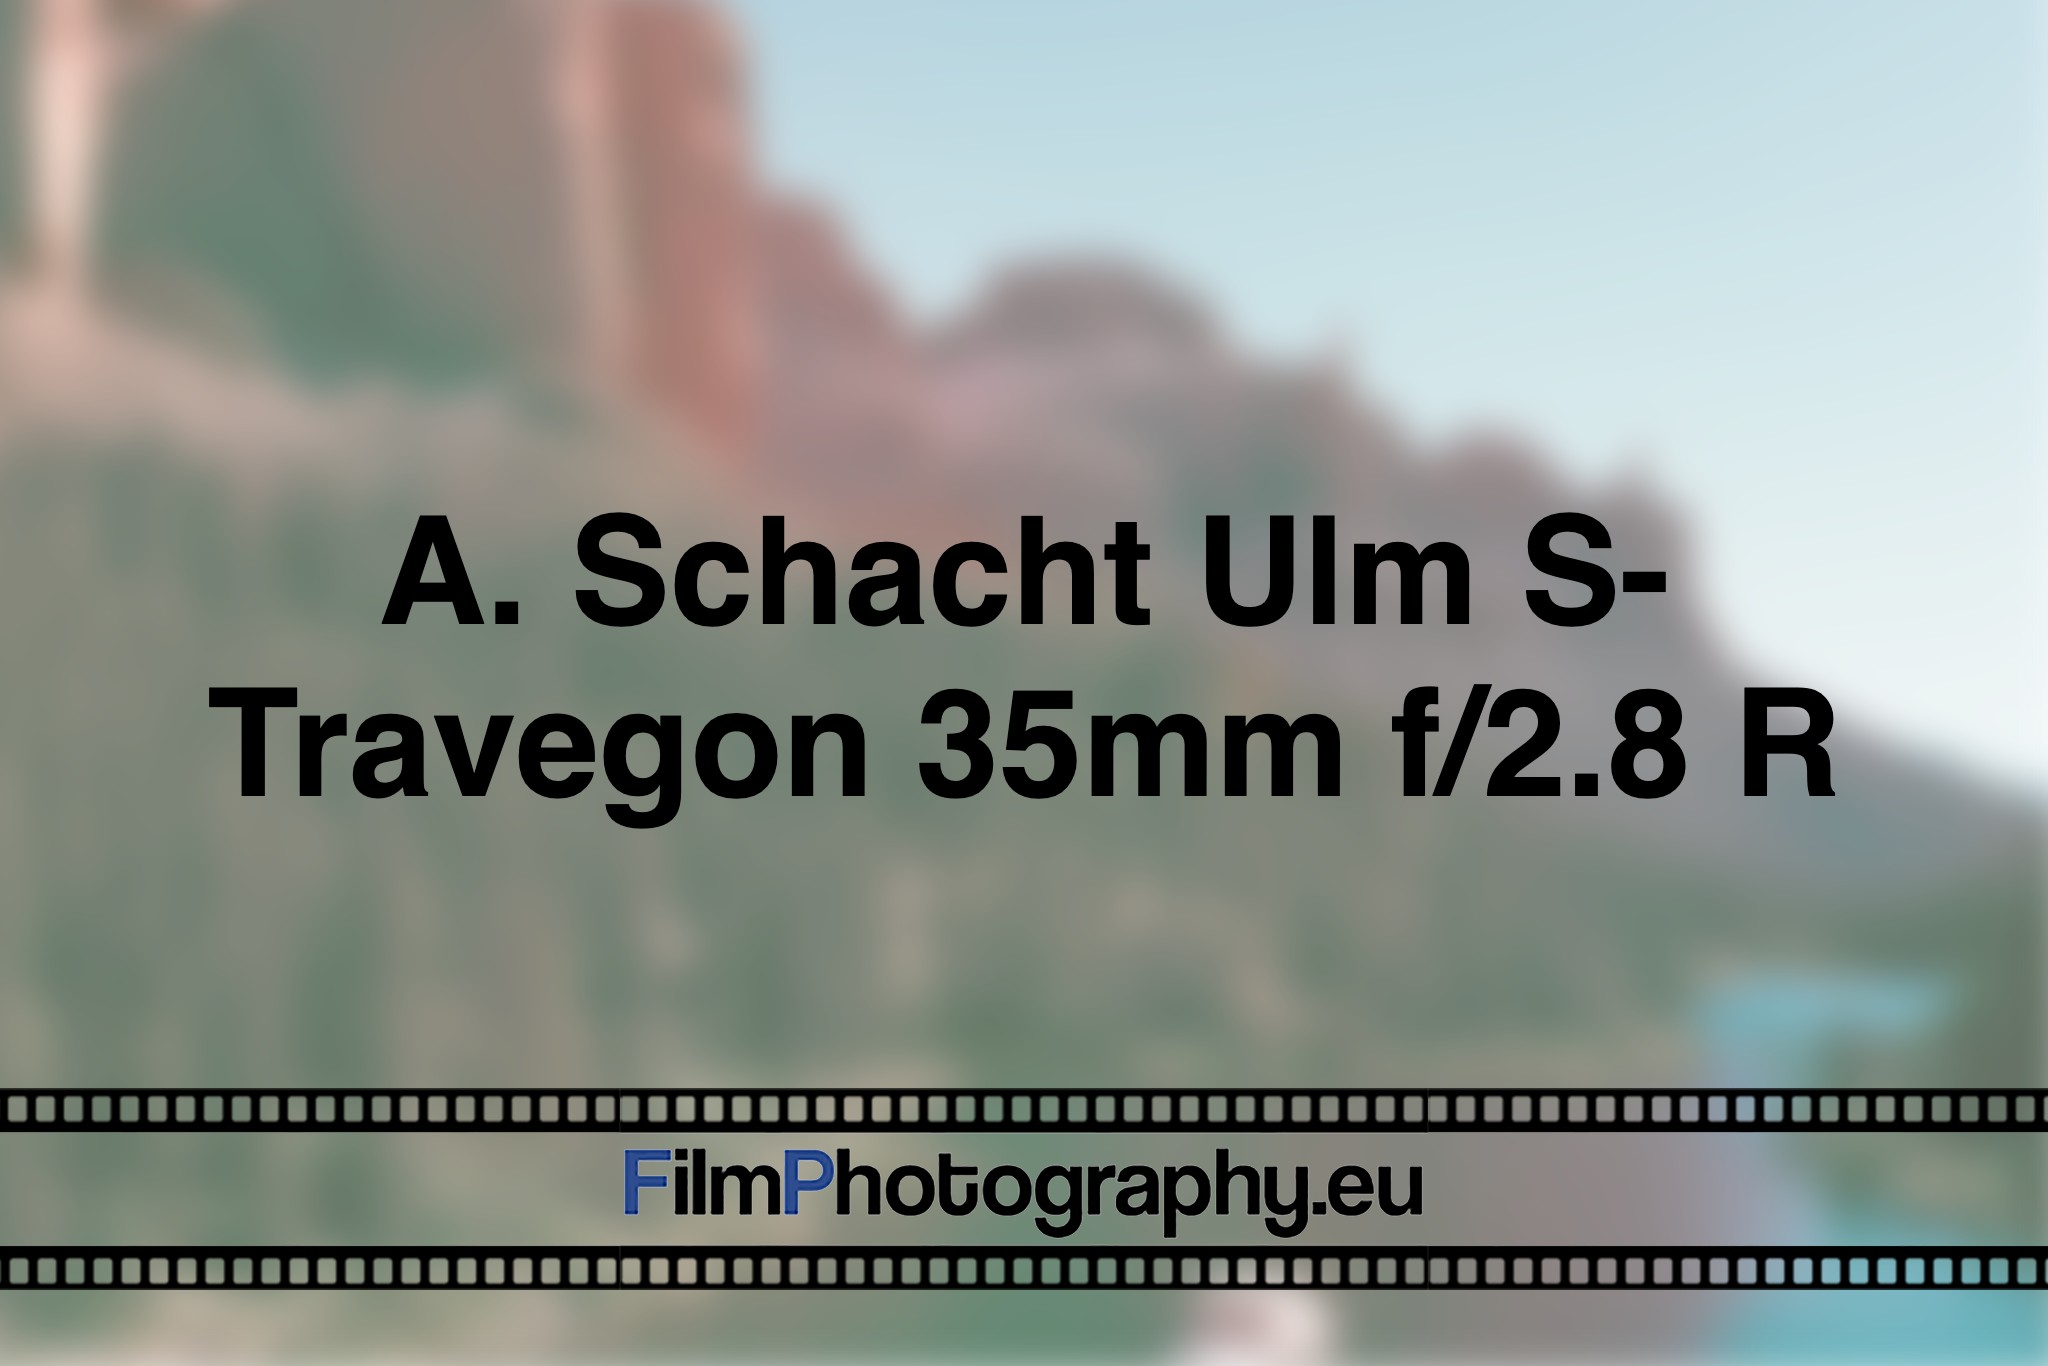 a-schacht-ulm-s-travegon-35mm-f-2-8-r-photo-bnv